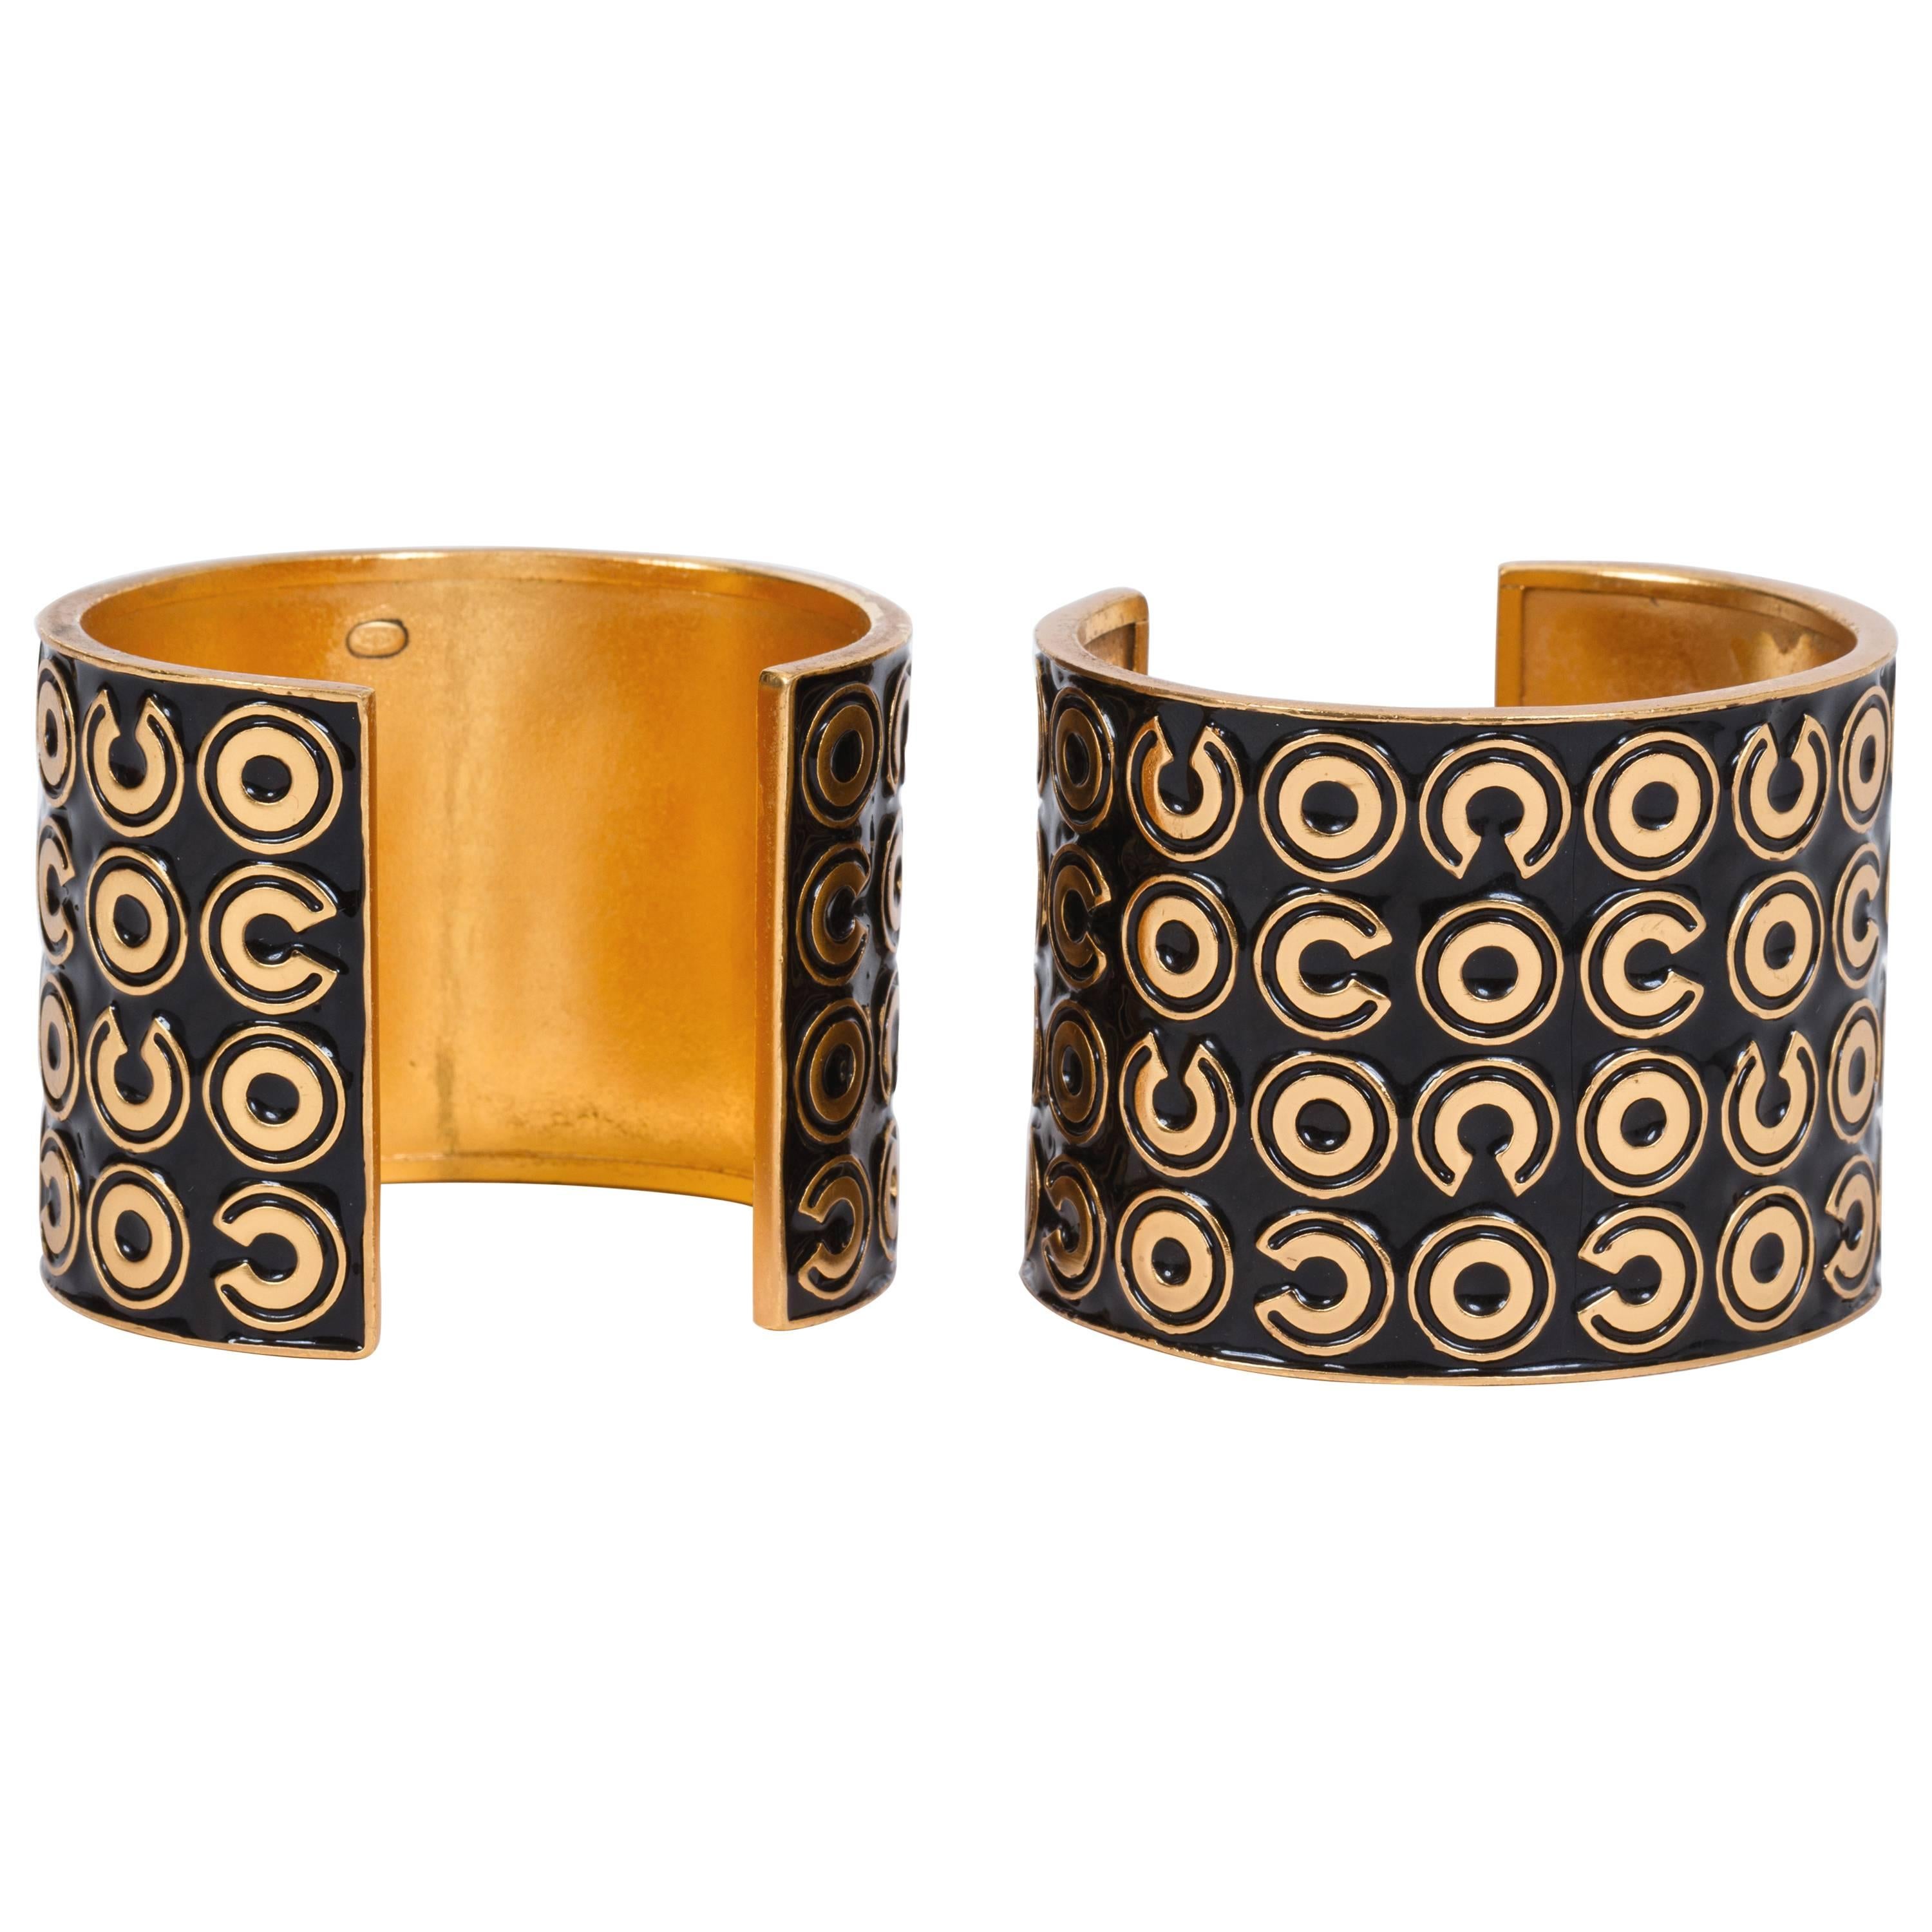 Chanel Pair of Black/Gold Cuff Bracelets